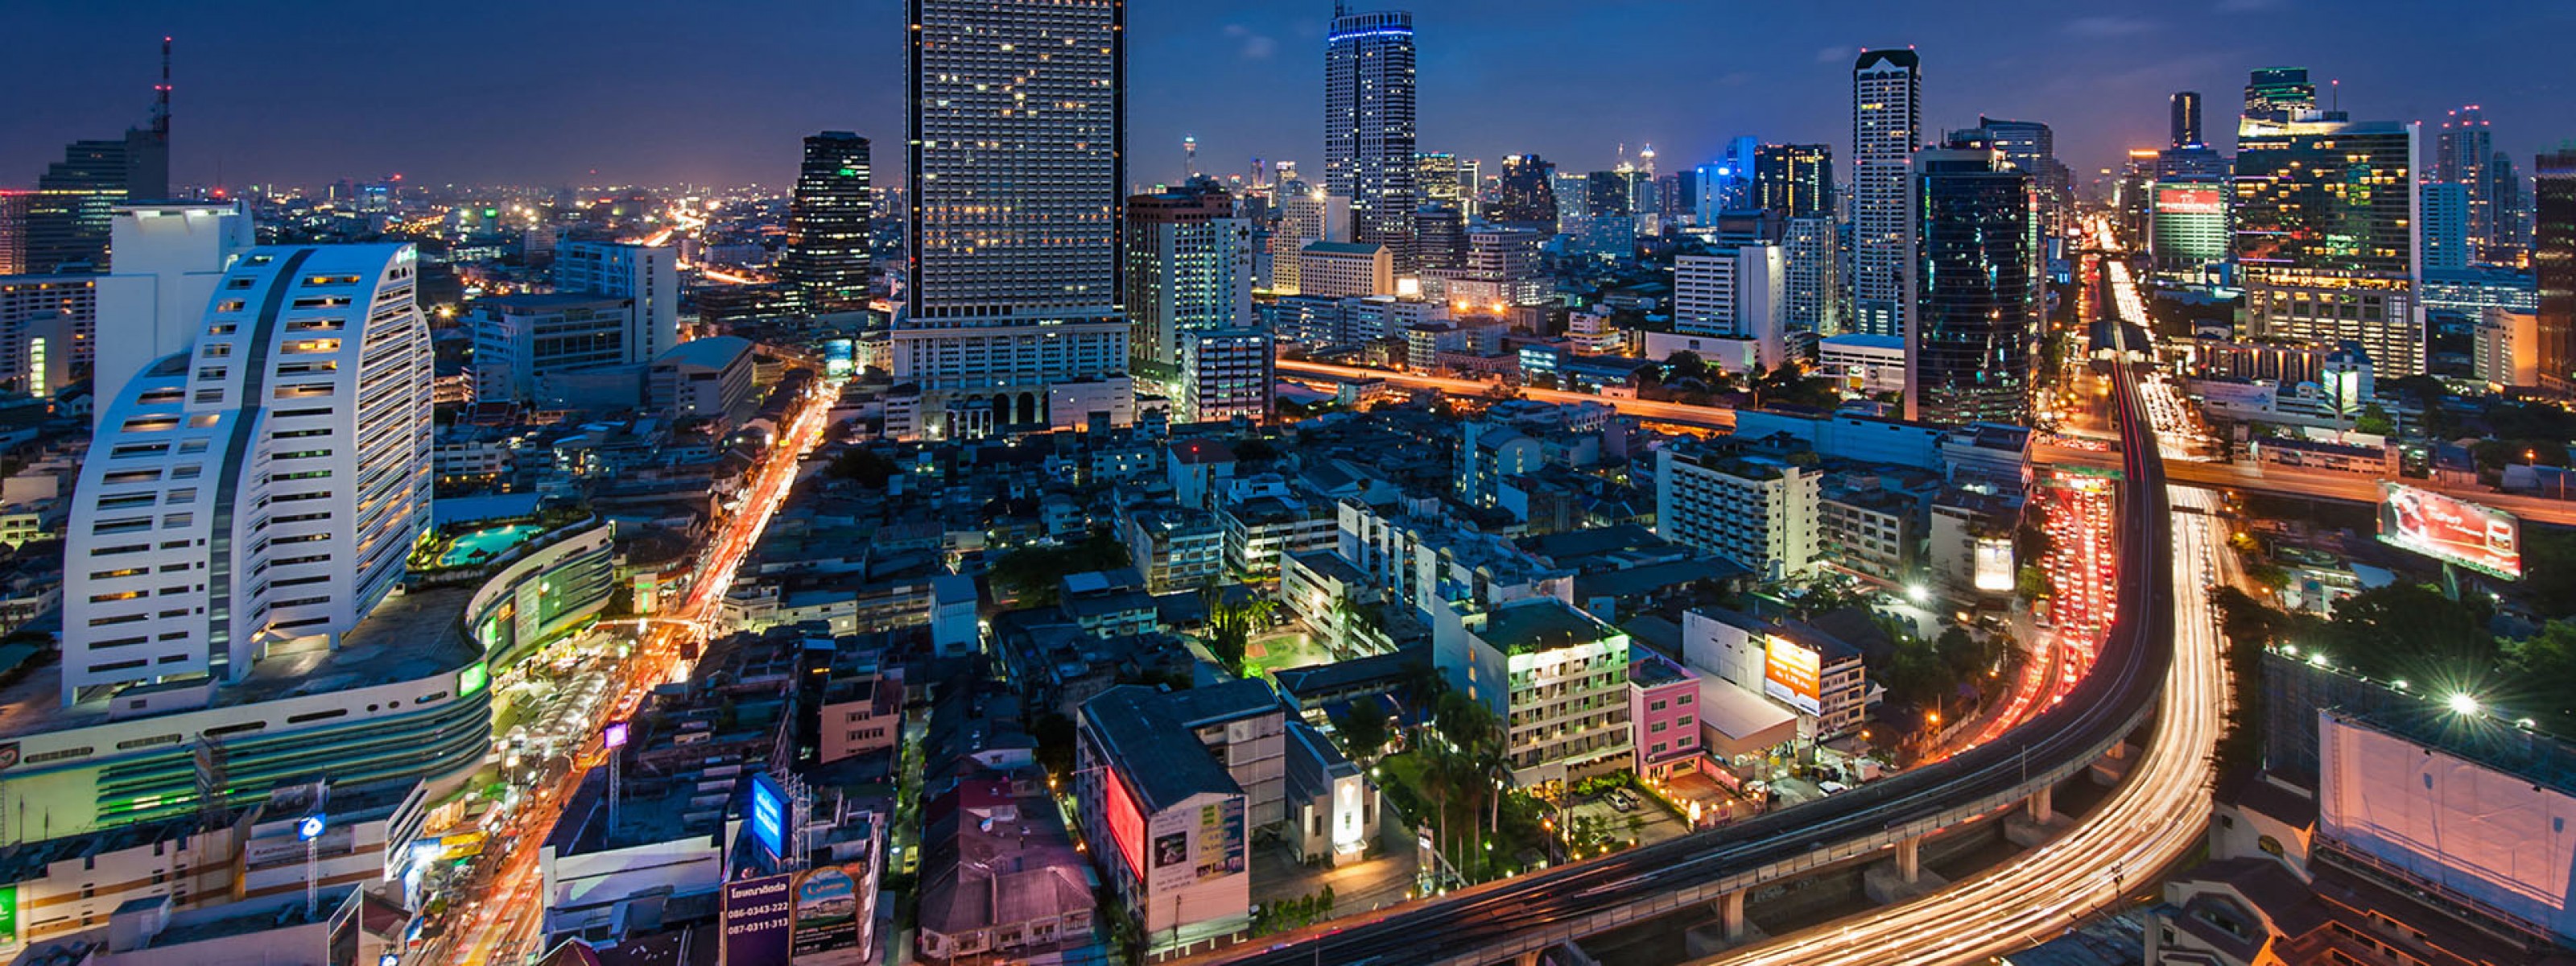 Bangkok thailand 3200x1200